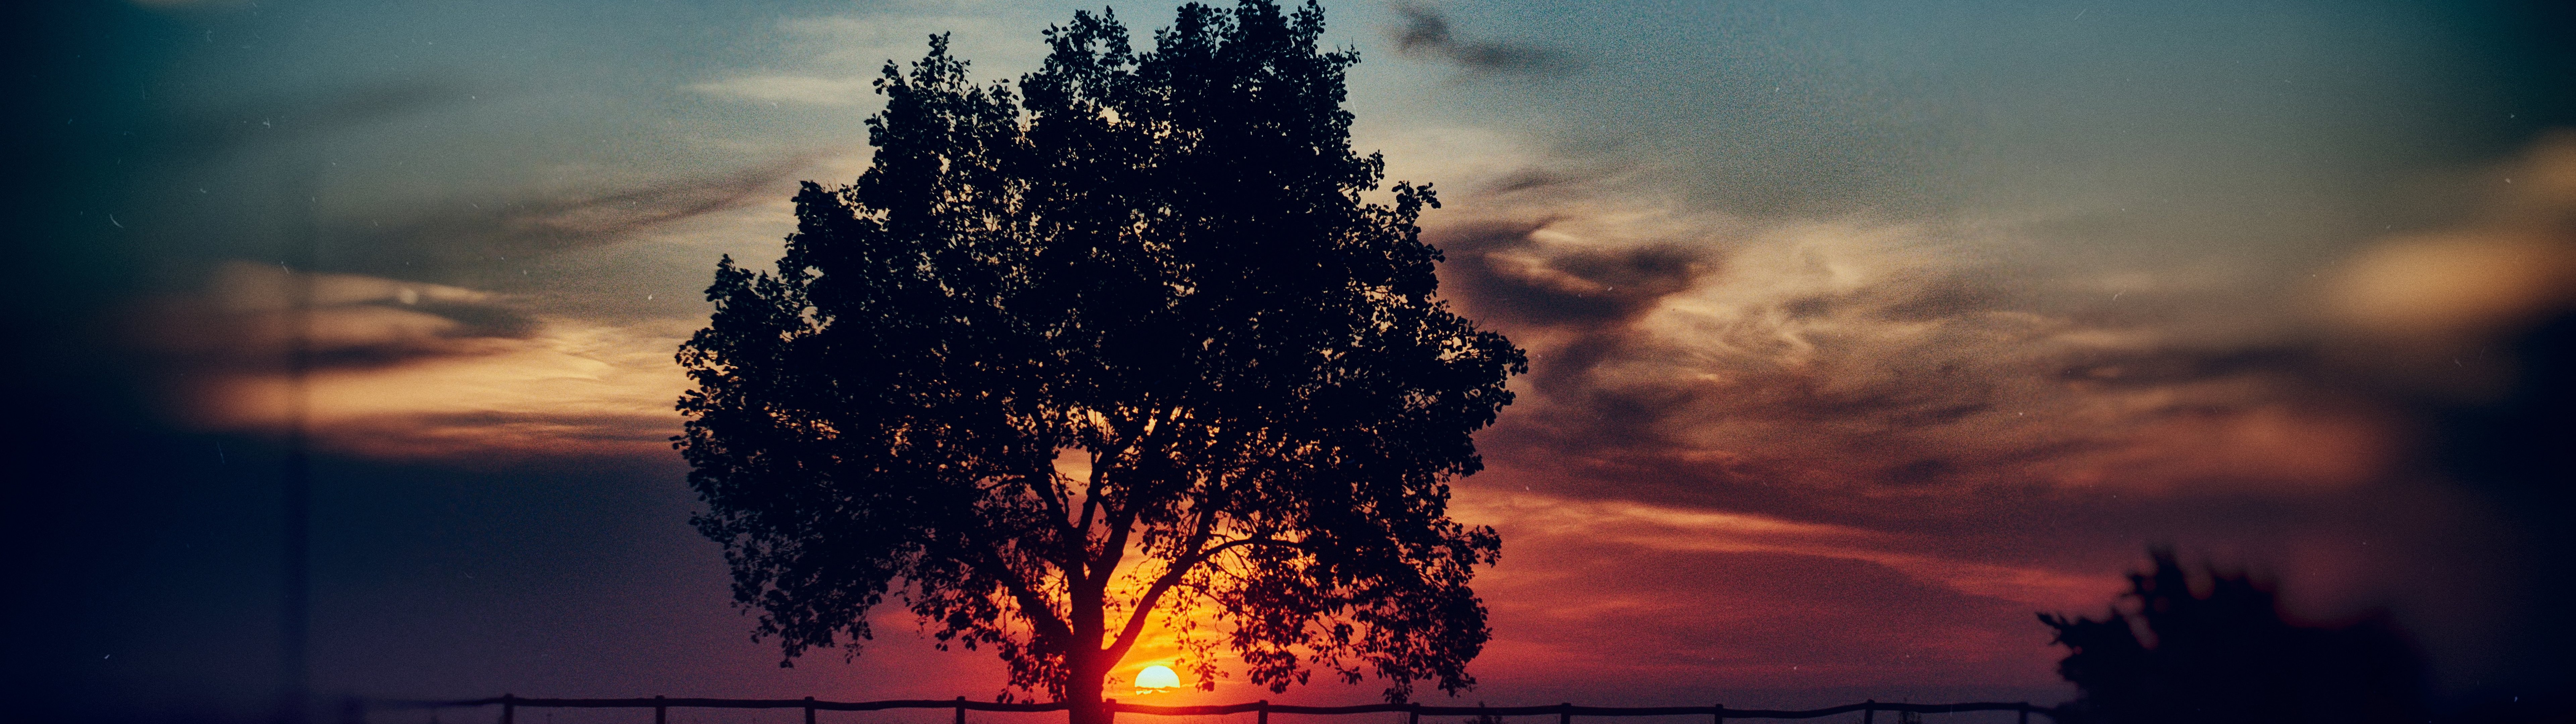 Sunset, Scenery, Tree, Landscape, Nature, 8k, 7680x4320, - Imagenes 1280 X 960 Hd - HD Wallpaper 